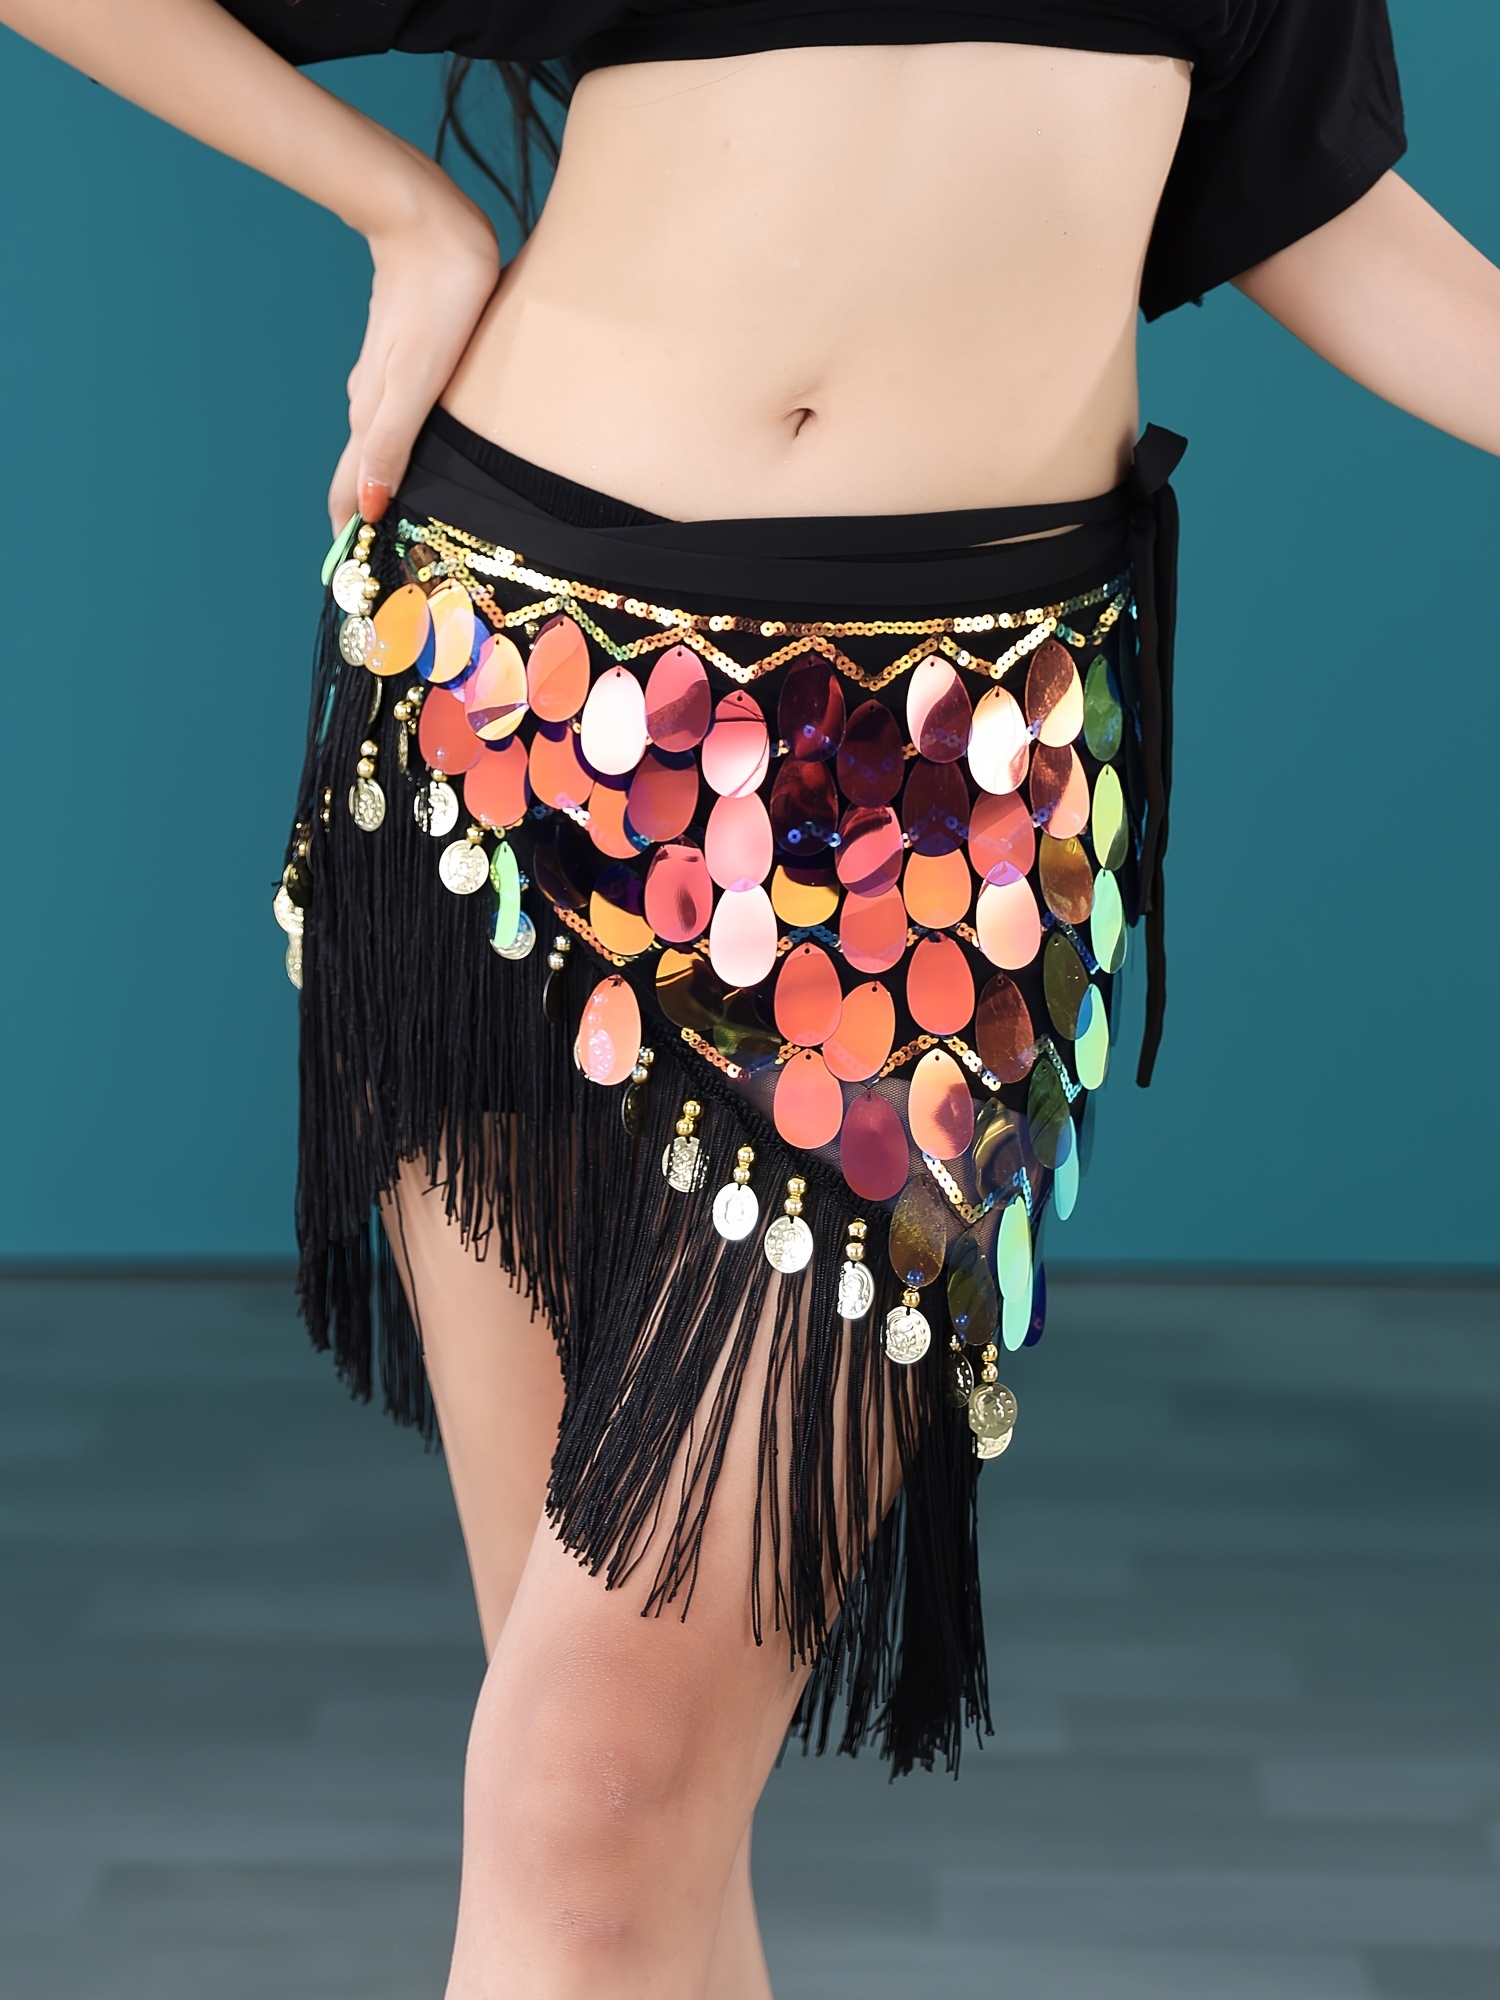 Tribal Fusion Belly Dance Kuchi Tie Belt Medallion Tassels Skirt Costume  Jewelry